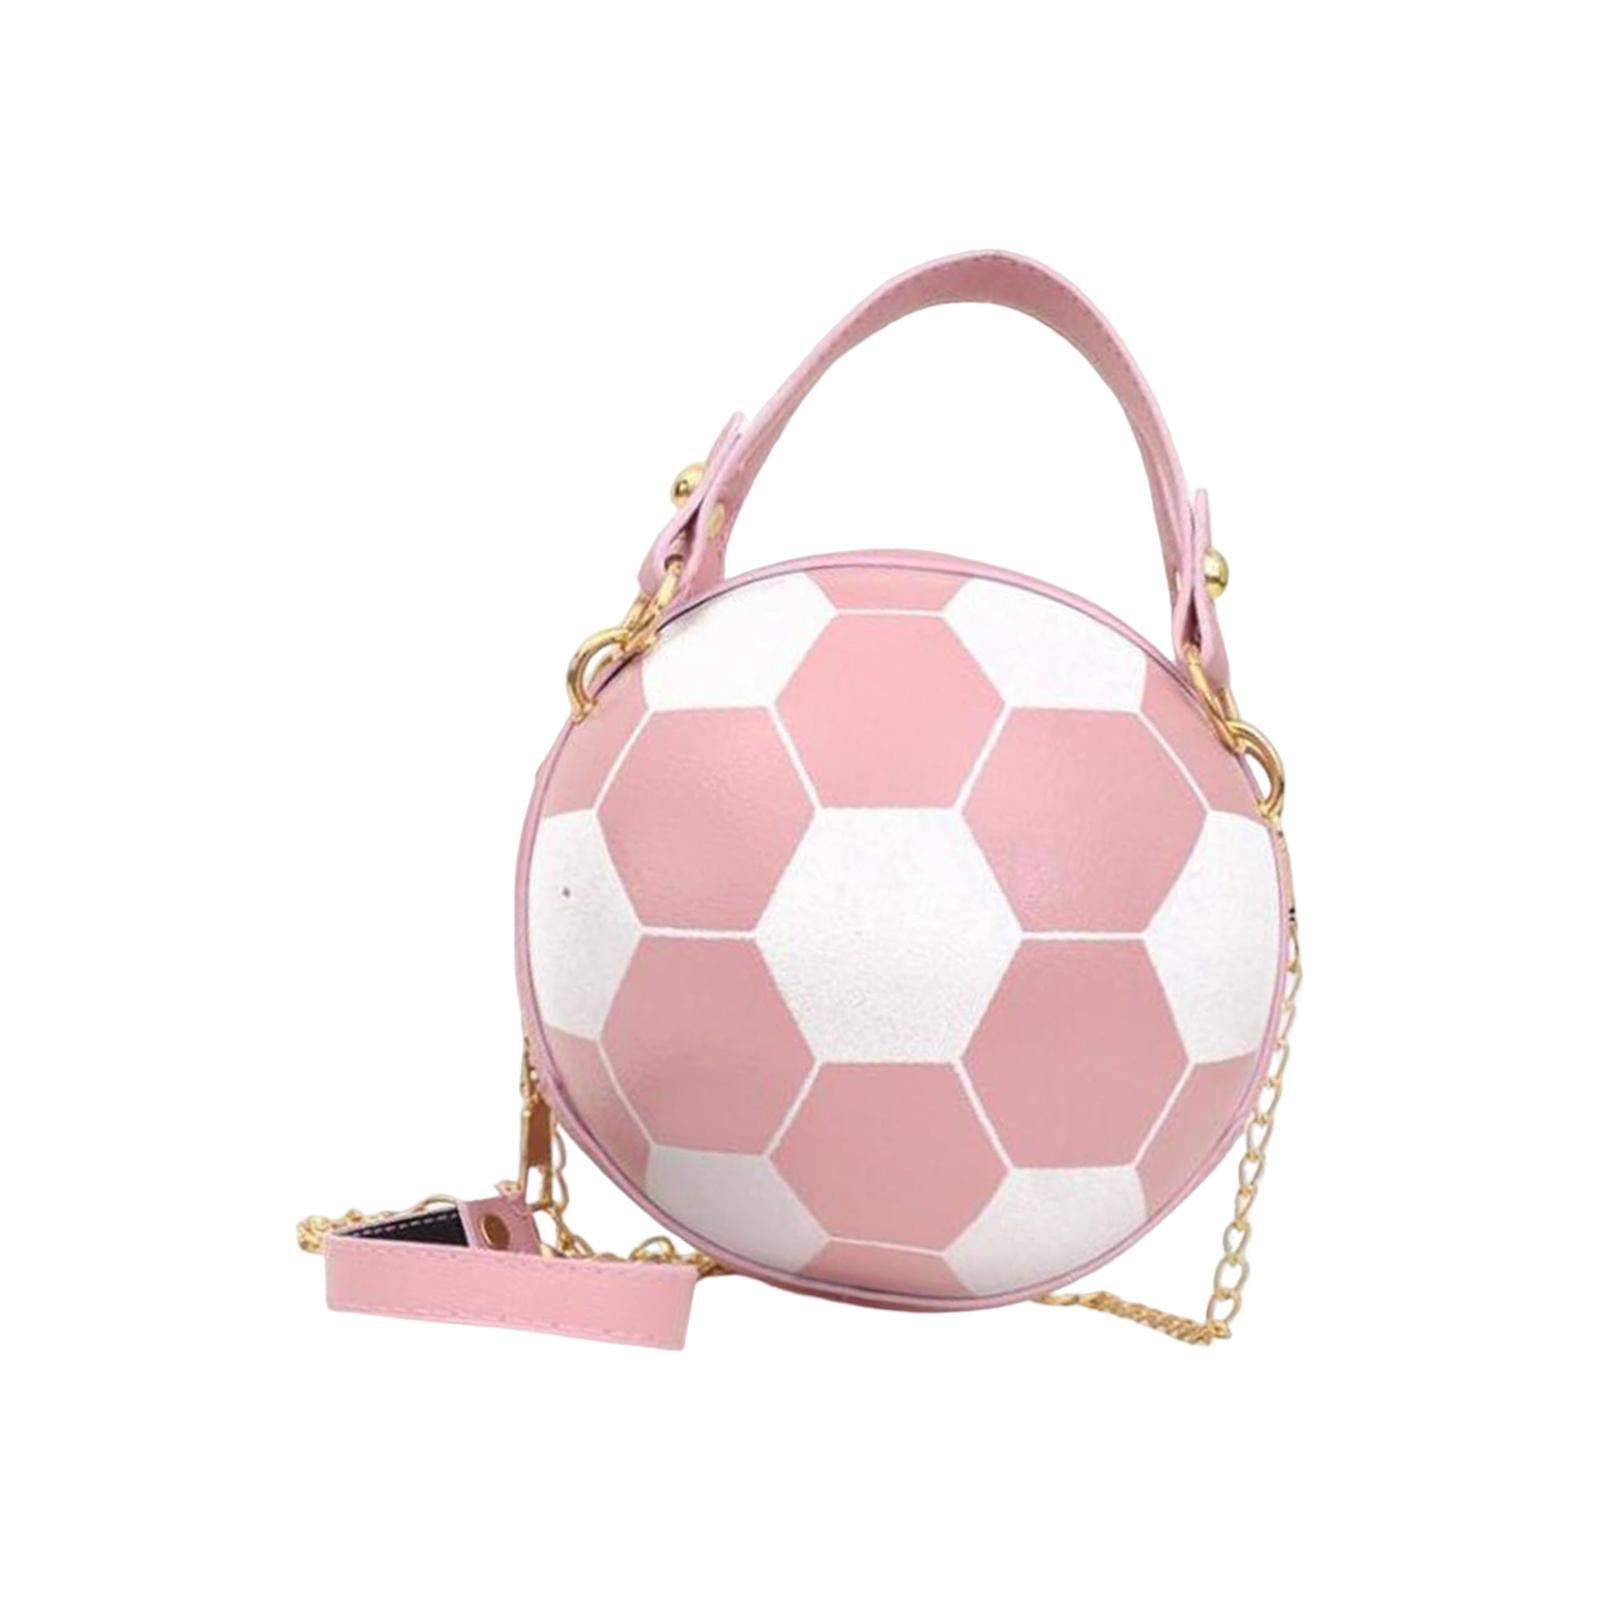 Big Capacity Football Shaped Cross Body Bag Purse Clutch Round Handbag  Fashion PU Shoulder Bag for Lady,Vacation,Travel Pink 